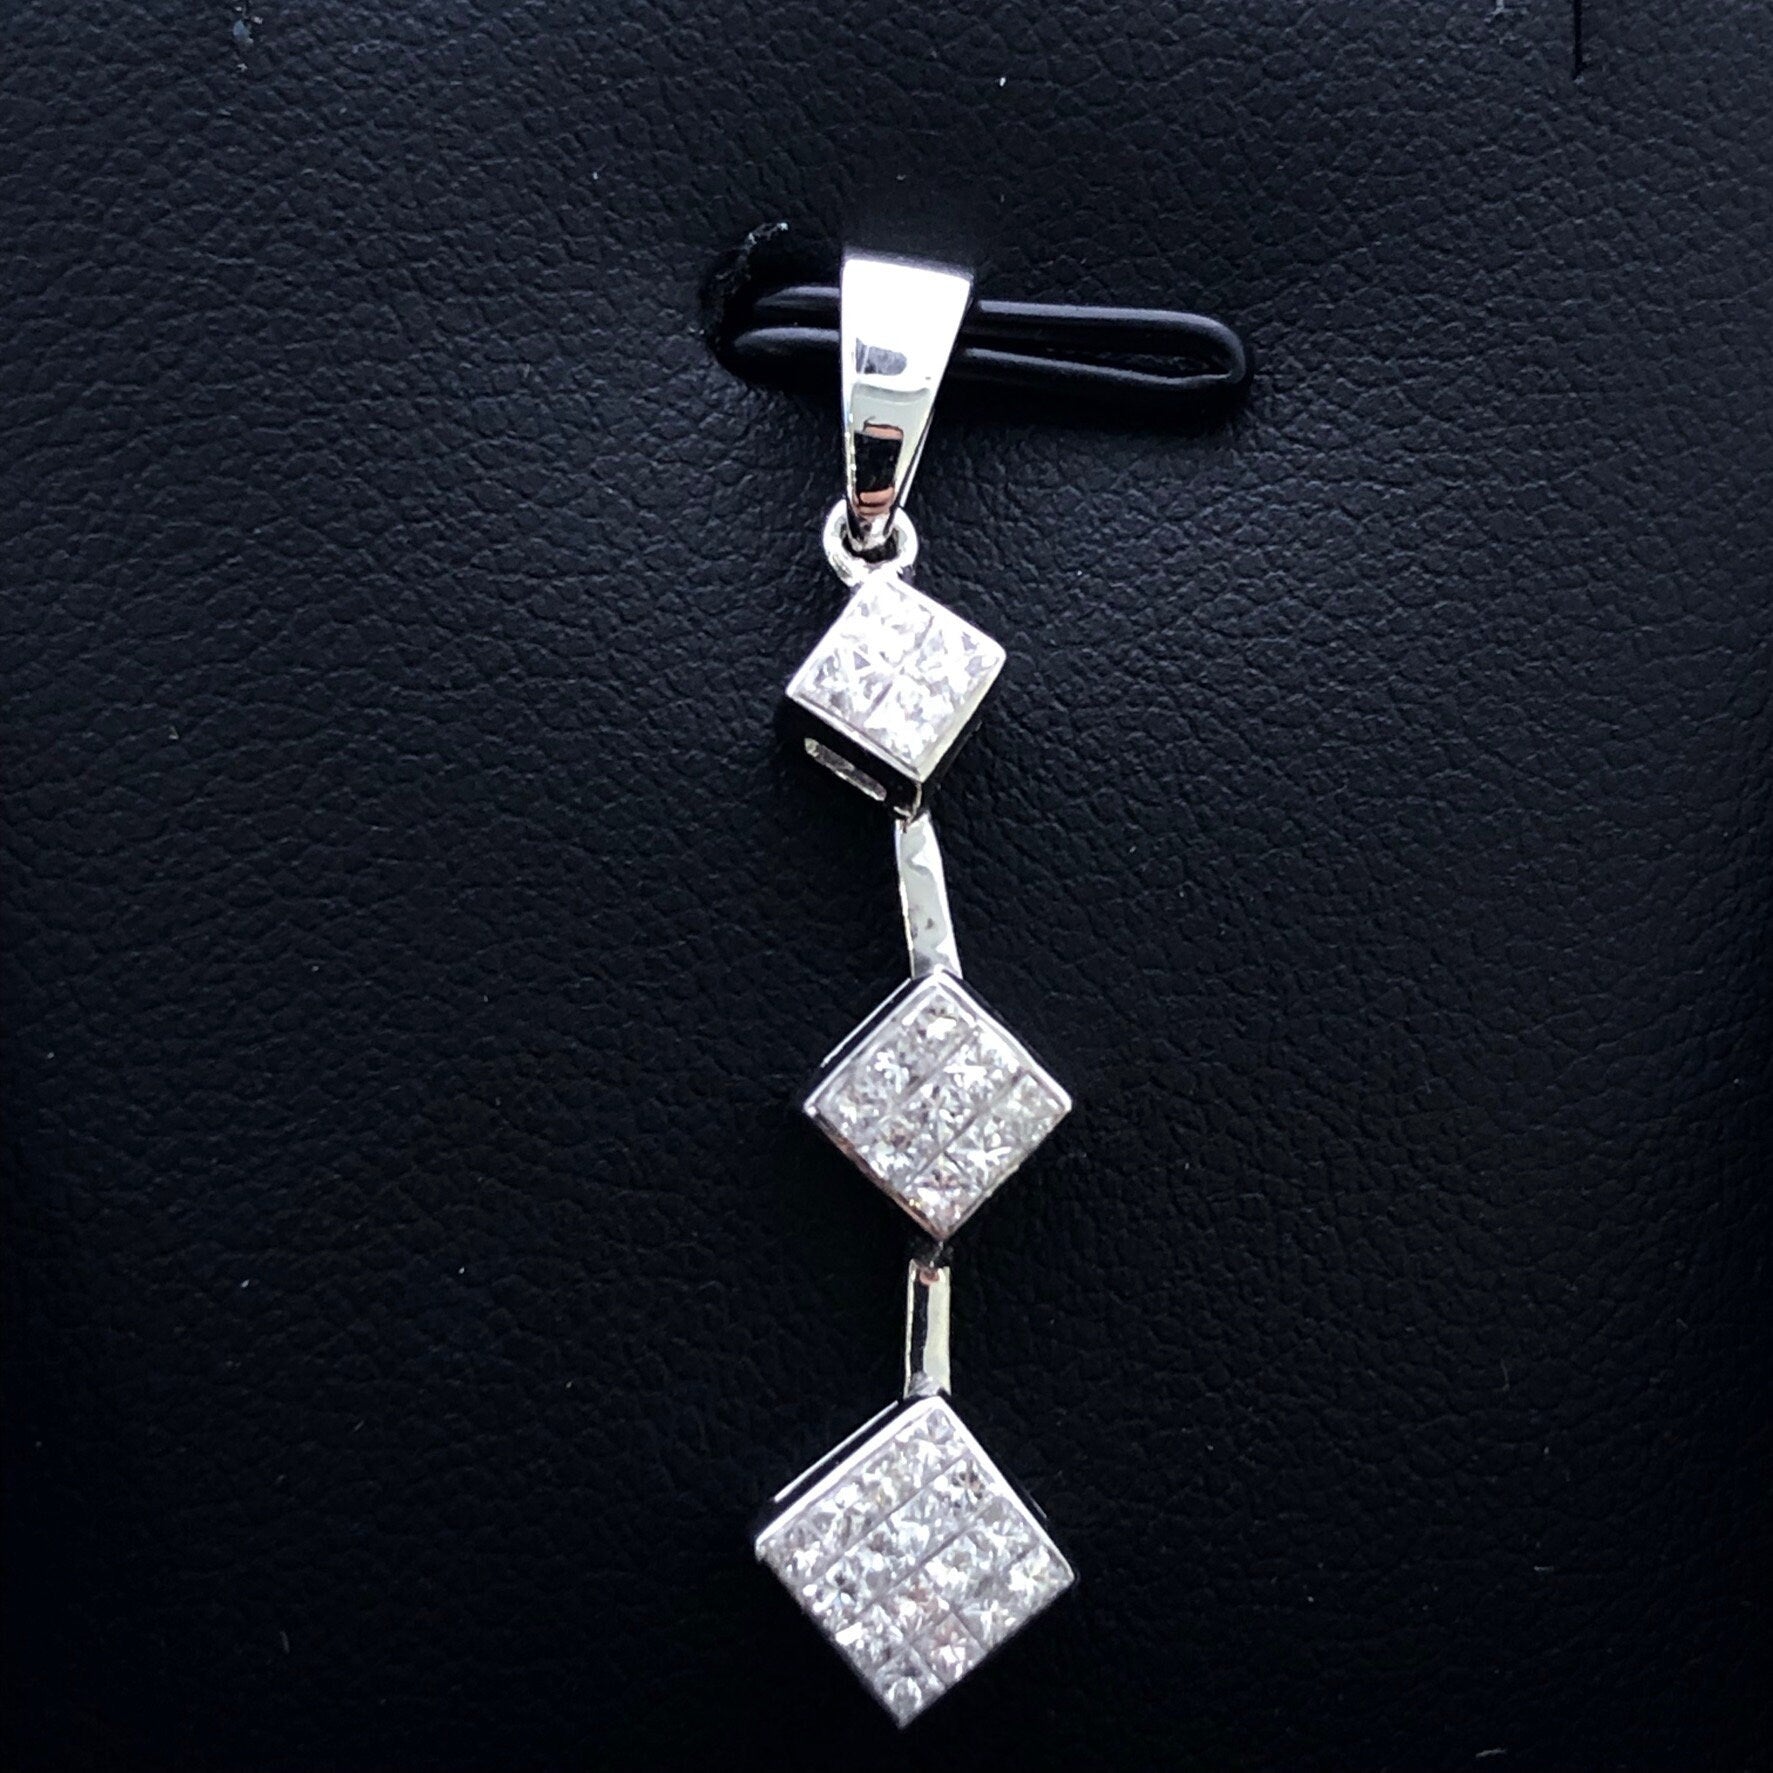 LIV 14k White Gold & Diamonds G/VS1 Princess Cut Invisible Design Pendant Necklace